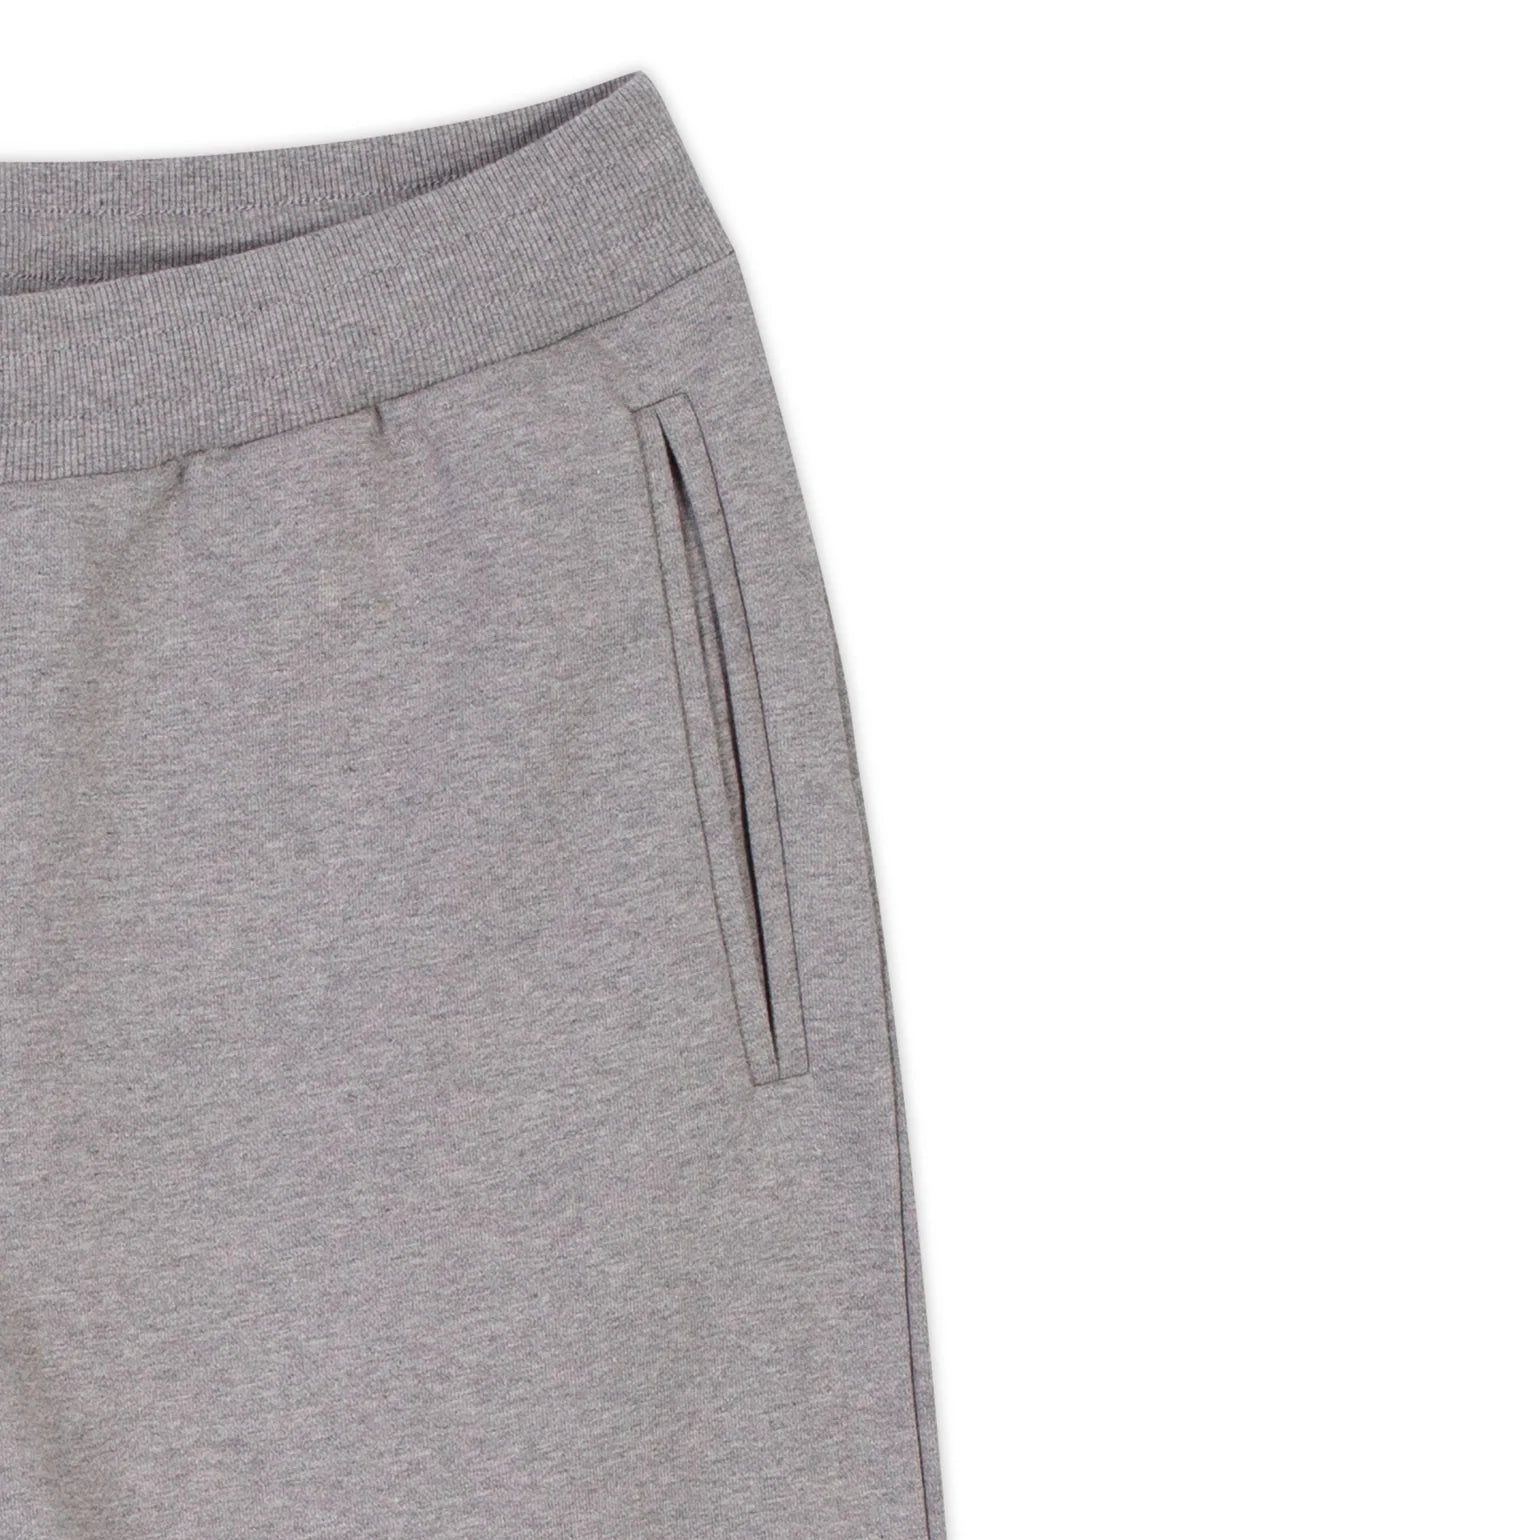 Grey Marl Sweatpants Original Allure